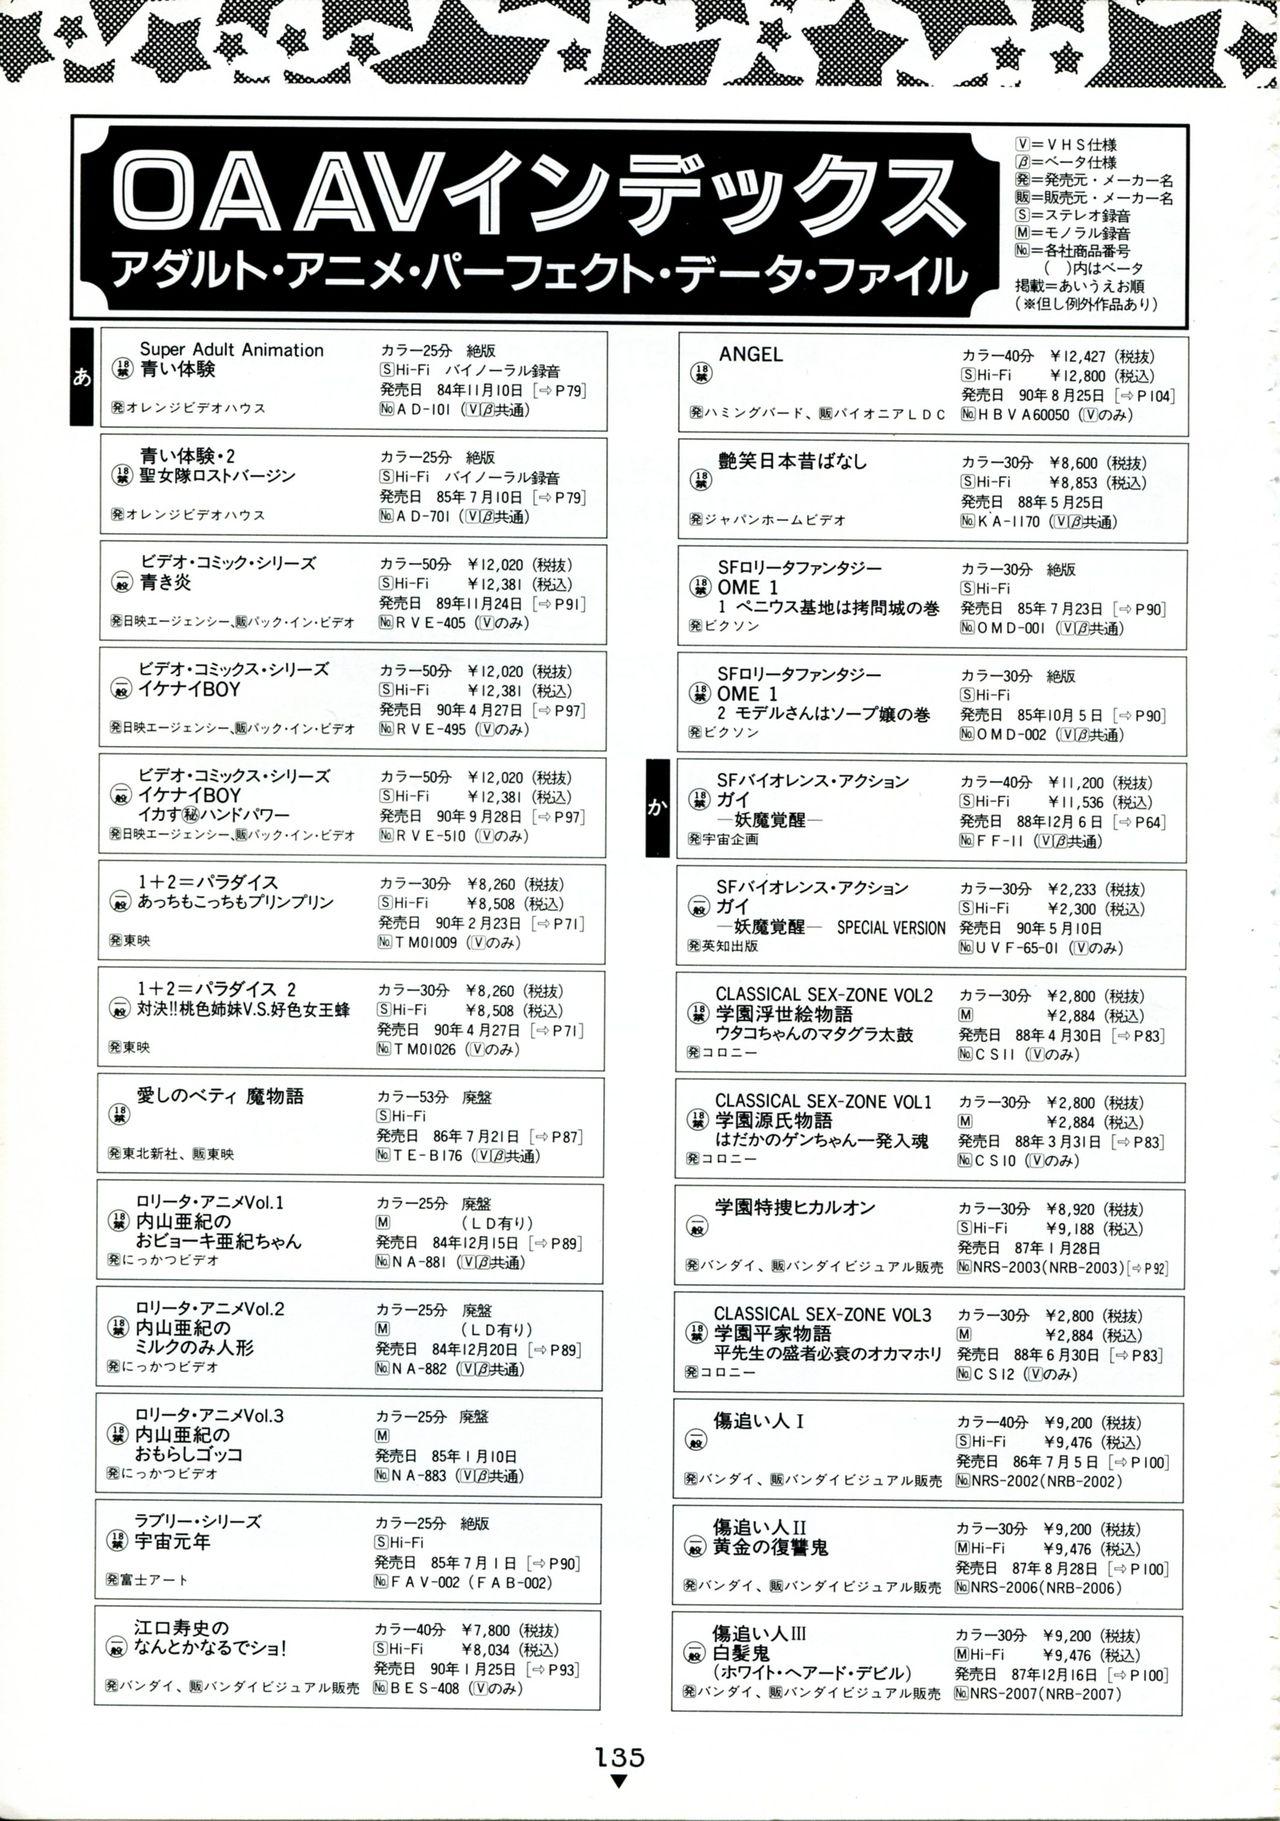 Bishoujo Anime Daizenshuu - Adult Animation Video Catalog 1991 130